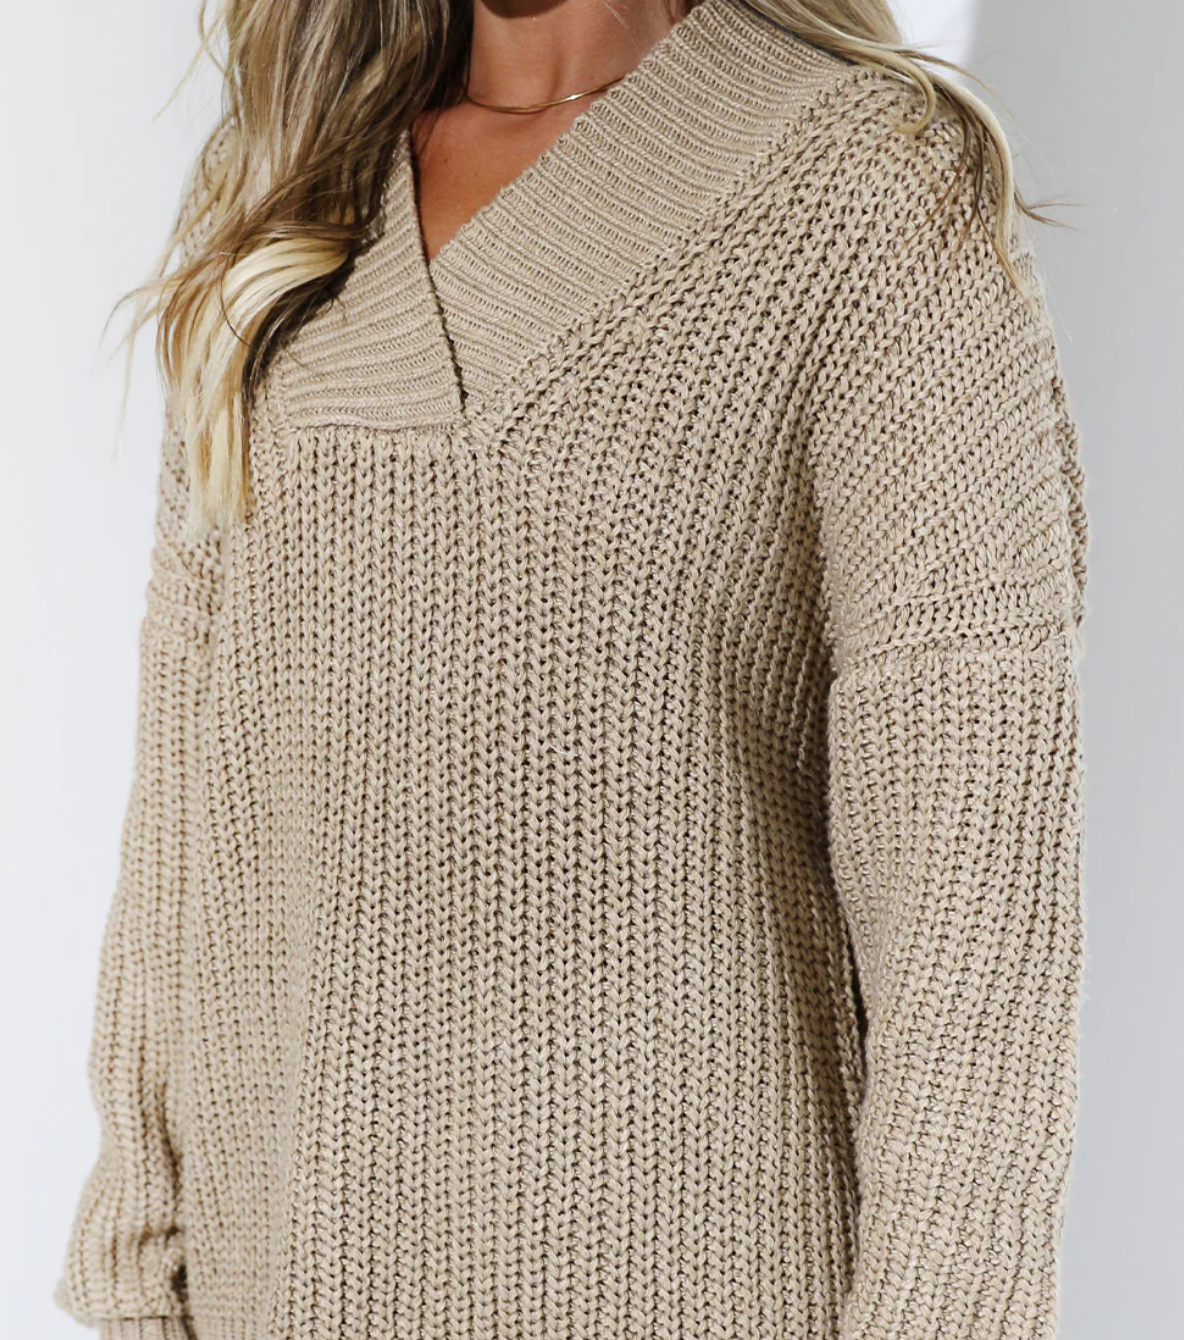 Kaia Knit Sweater